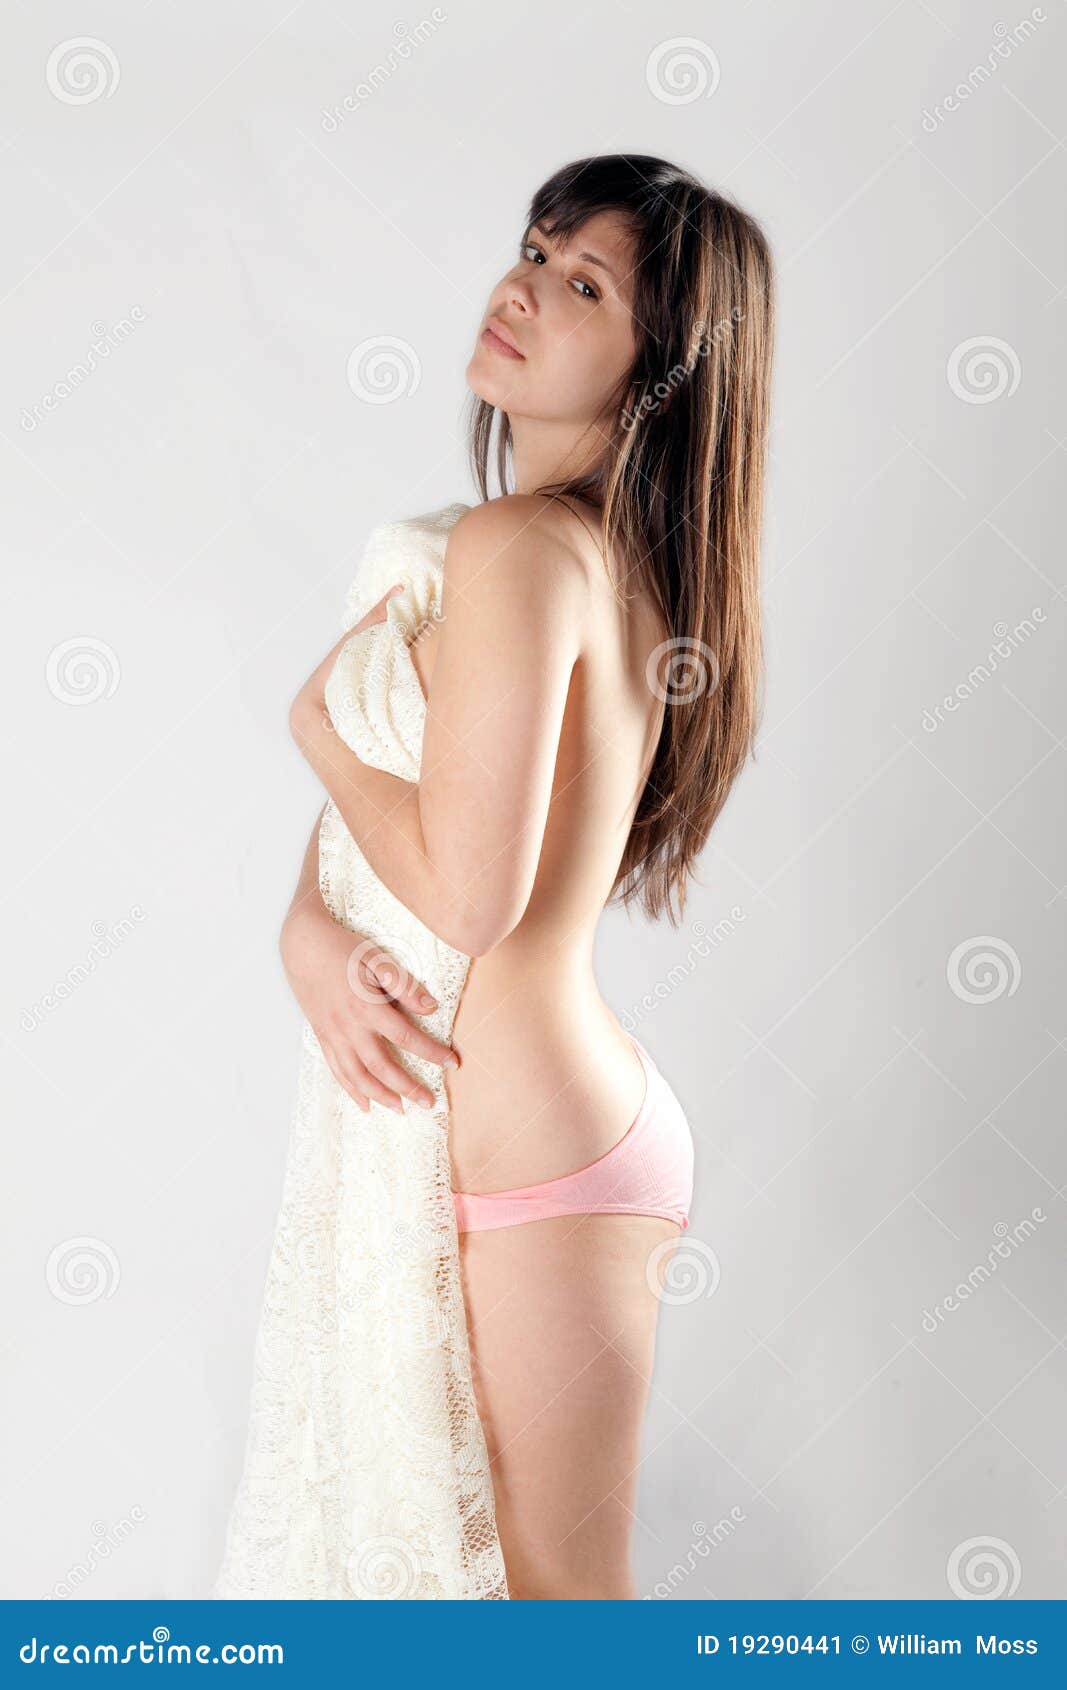 Pics Of Woman In Panties Scenes